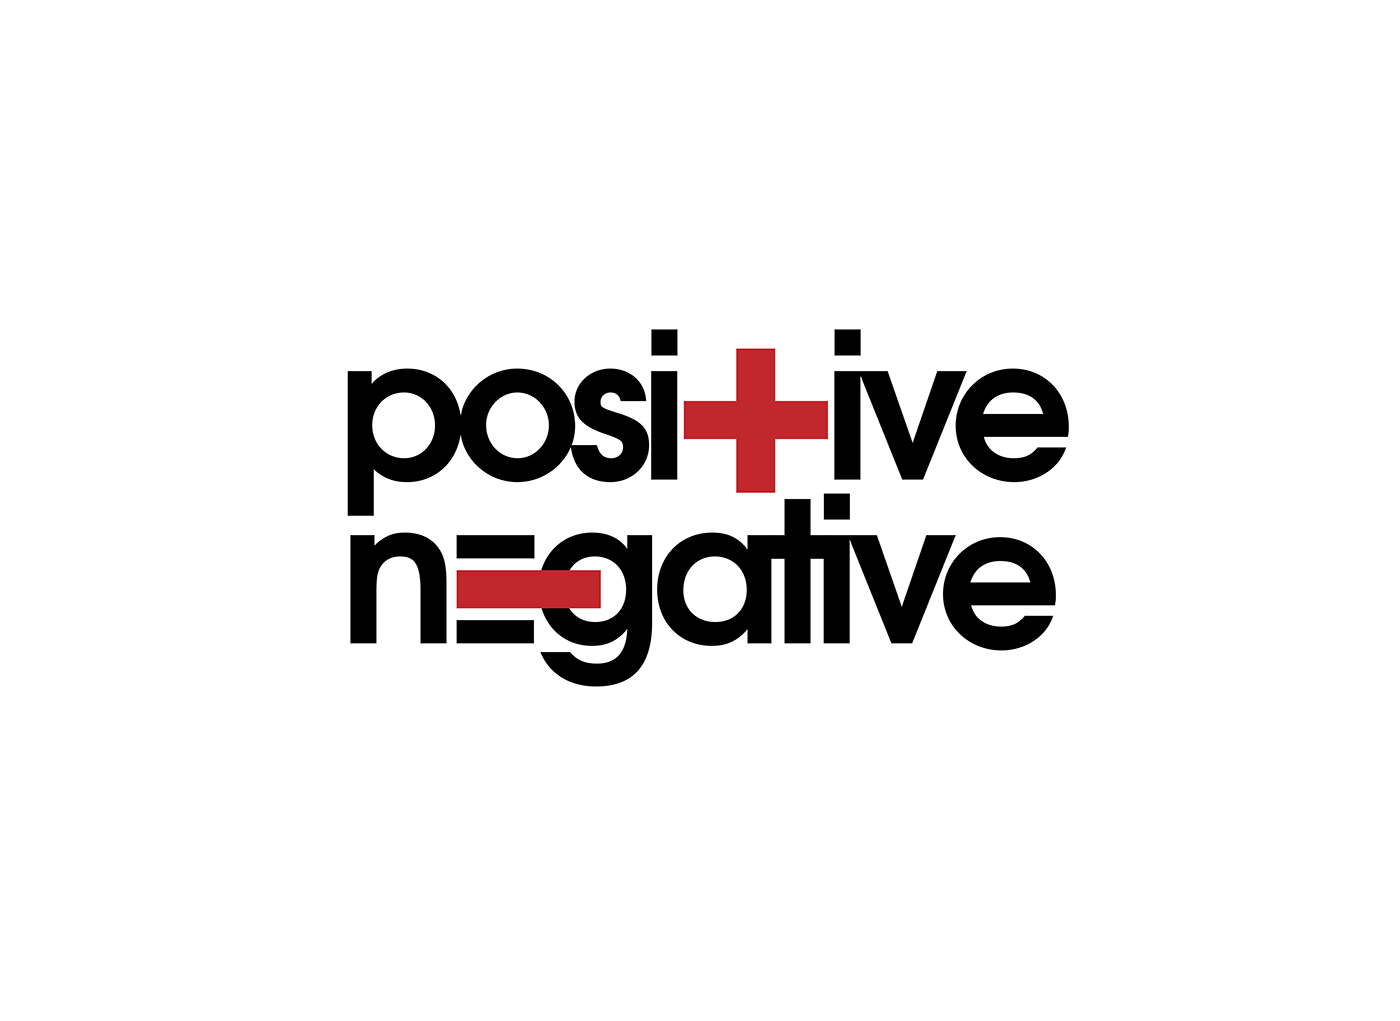 Positive Logo - Positive Negative Logo on Behance